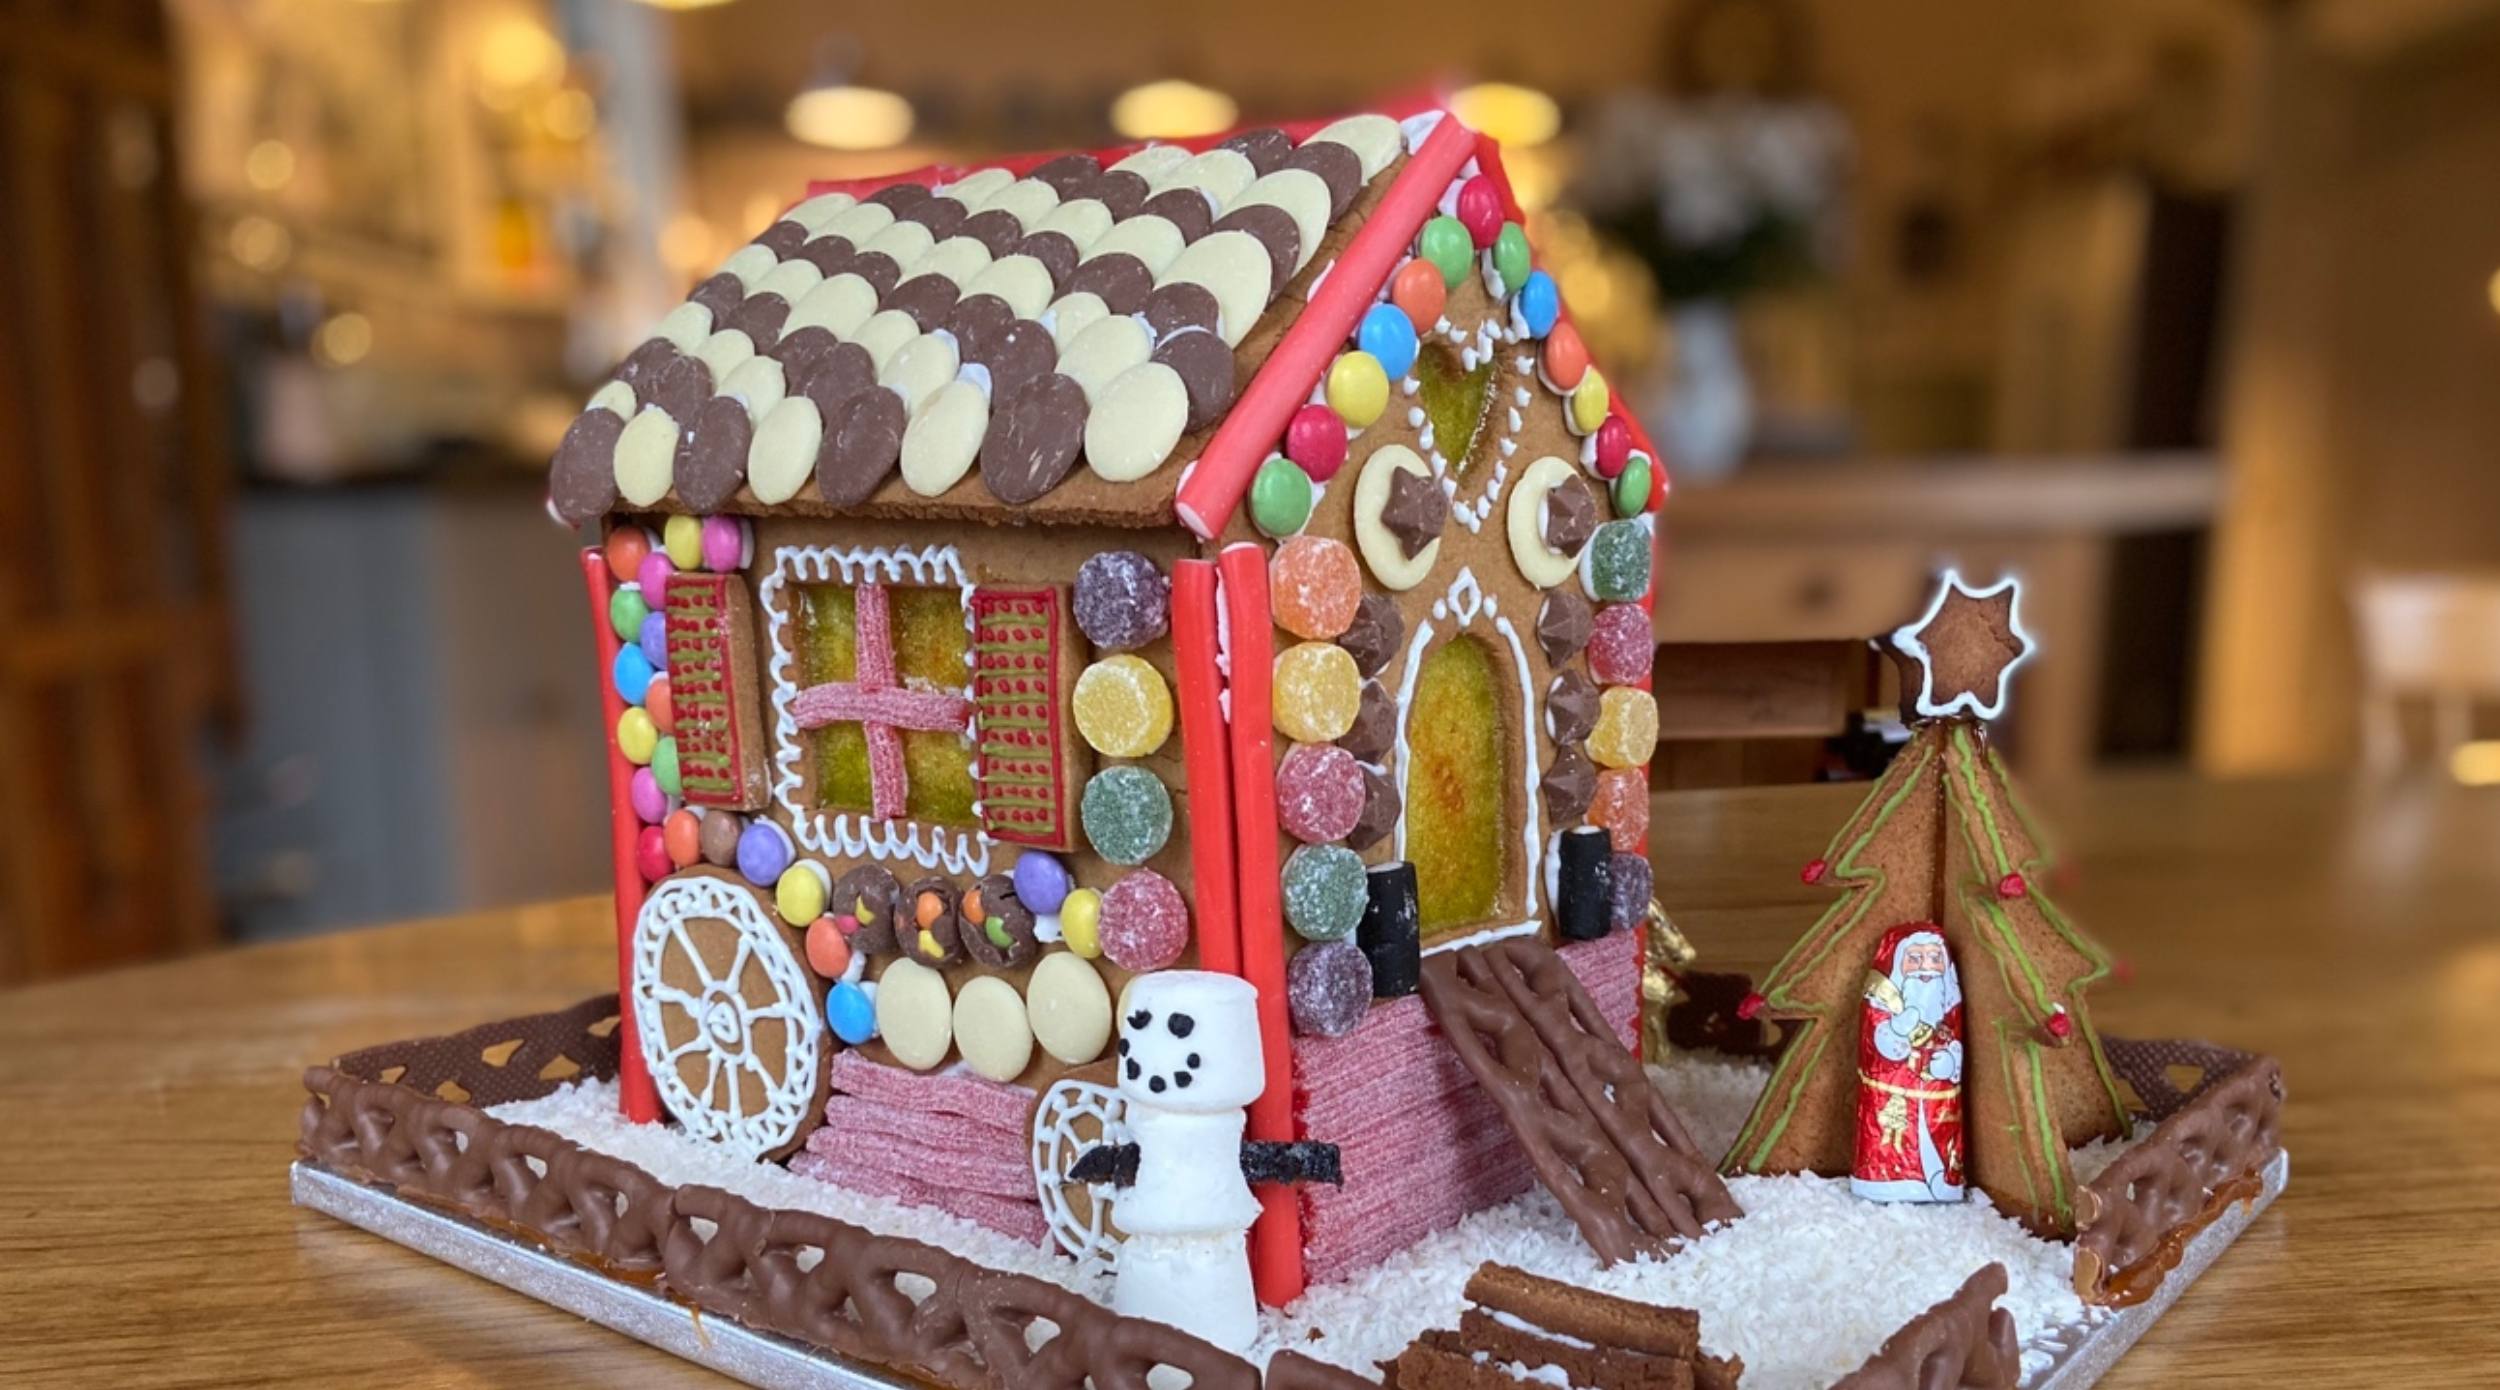 Create a Gingerbread House